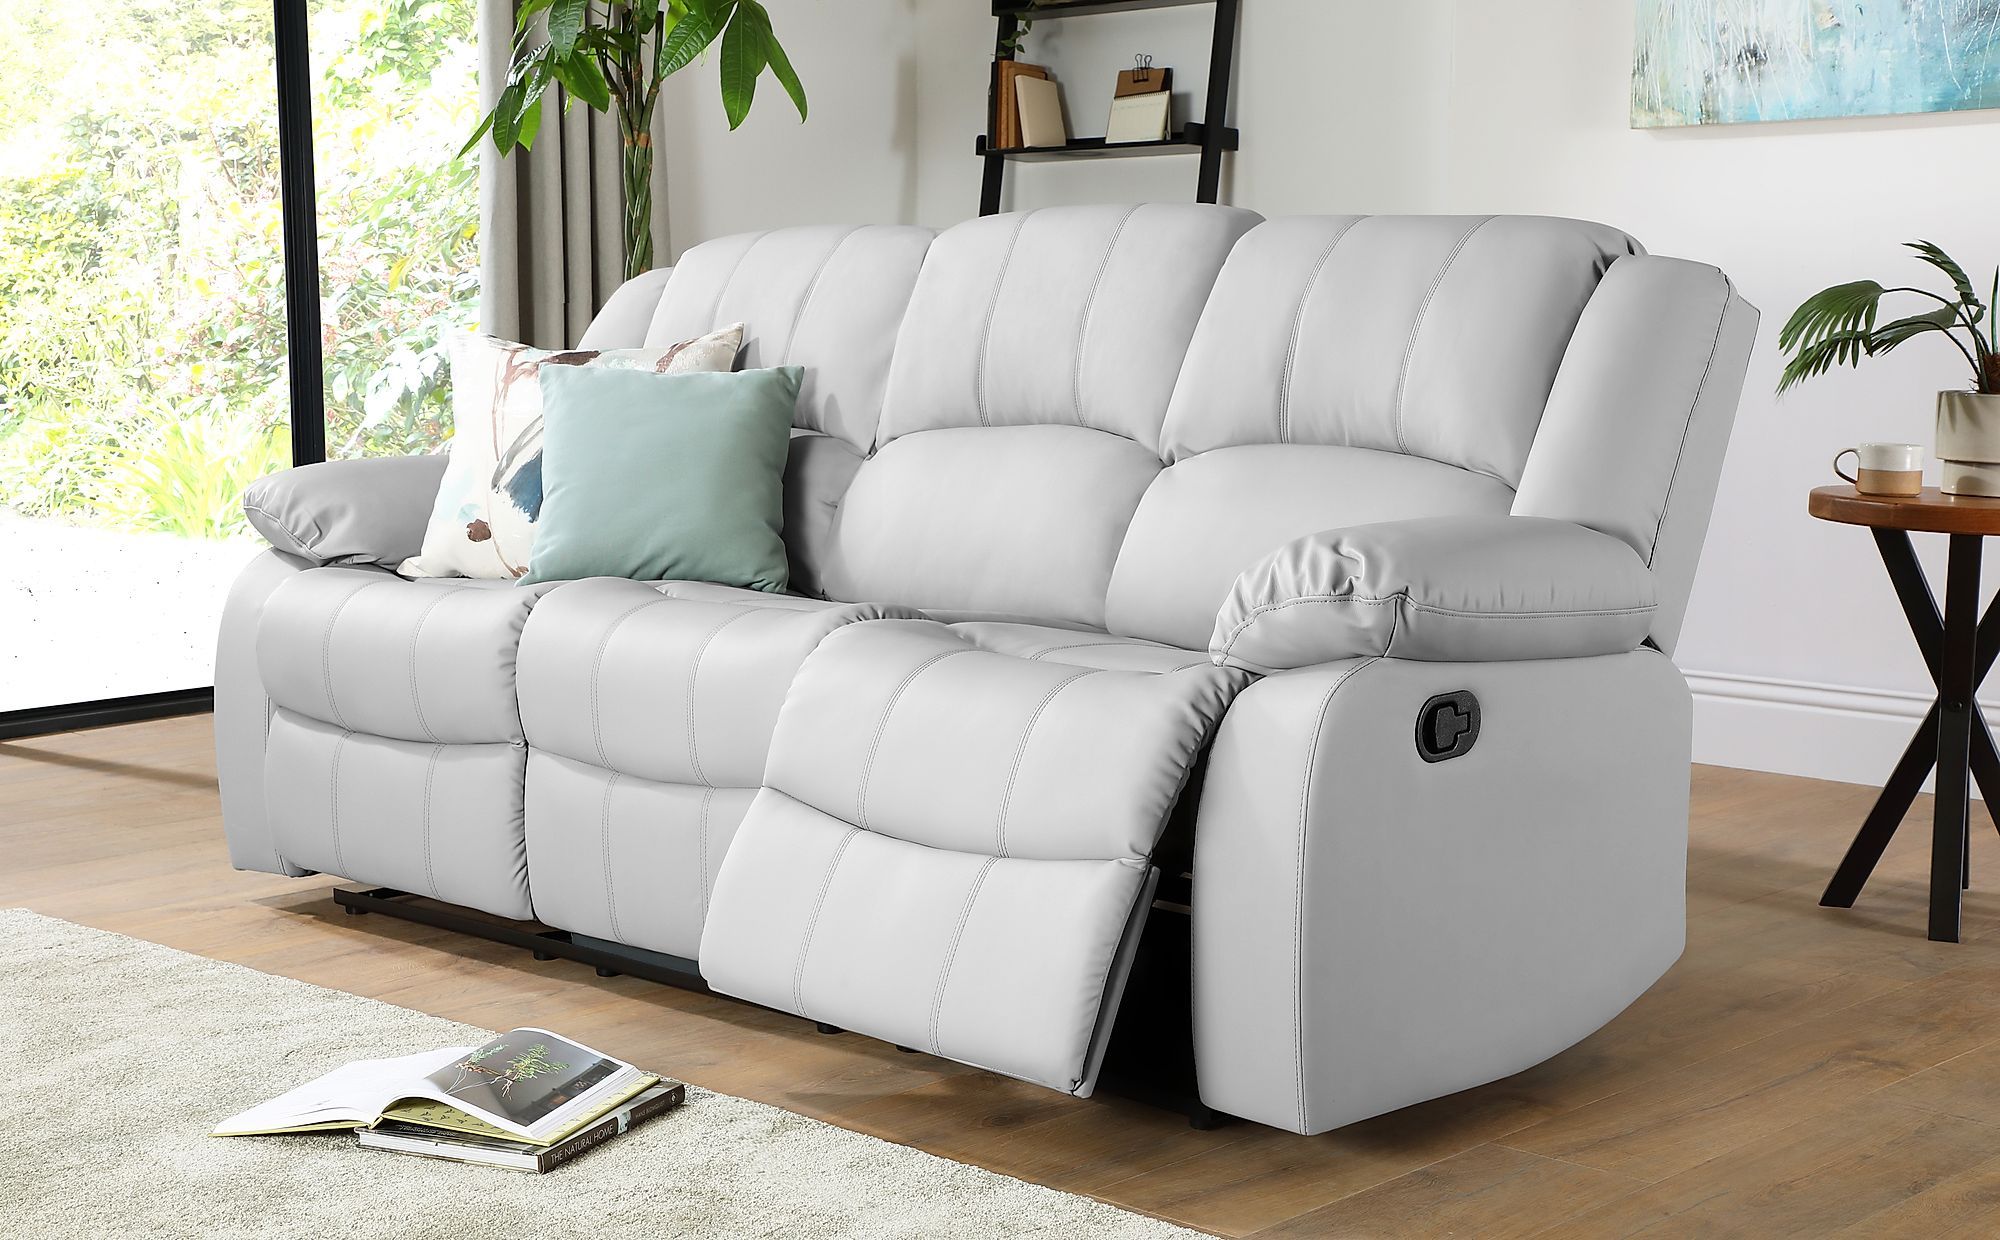 Dakota Light Grey Leather 3 Seater Recliner Sofa | Furniture Choice Inside Sofas In Light Grey (Gallery 12 of 20)